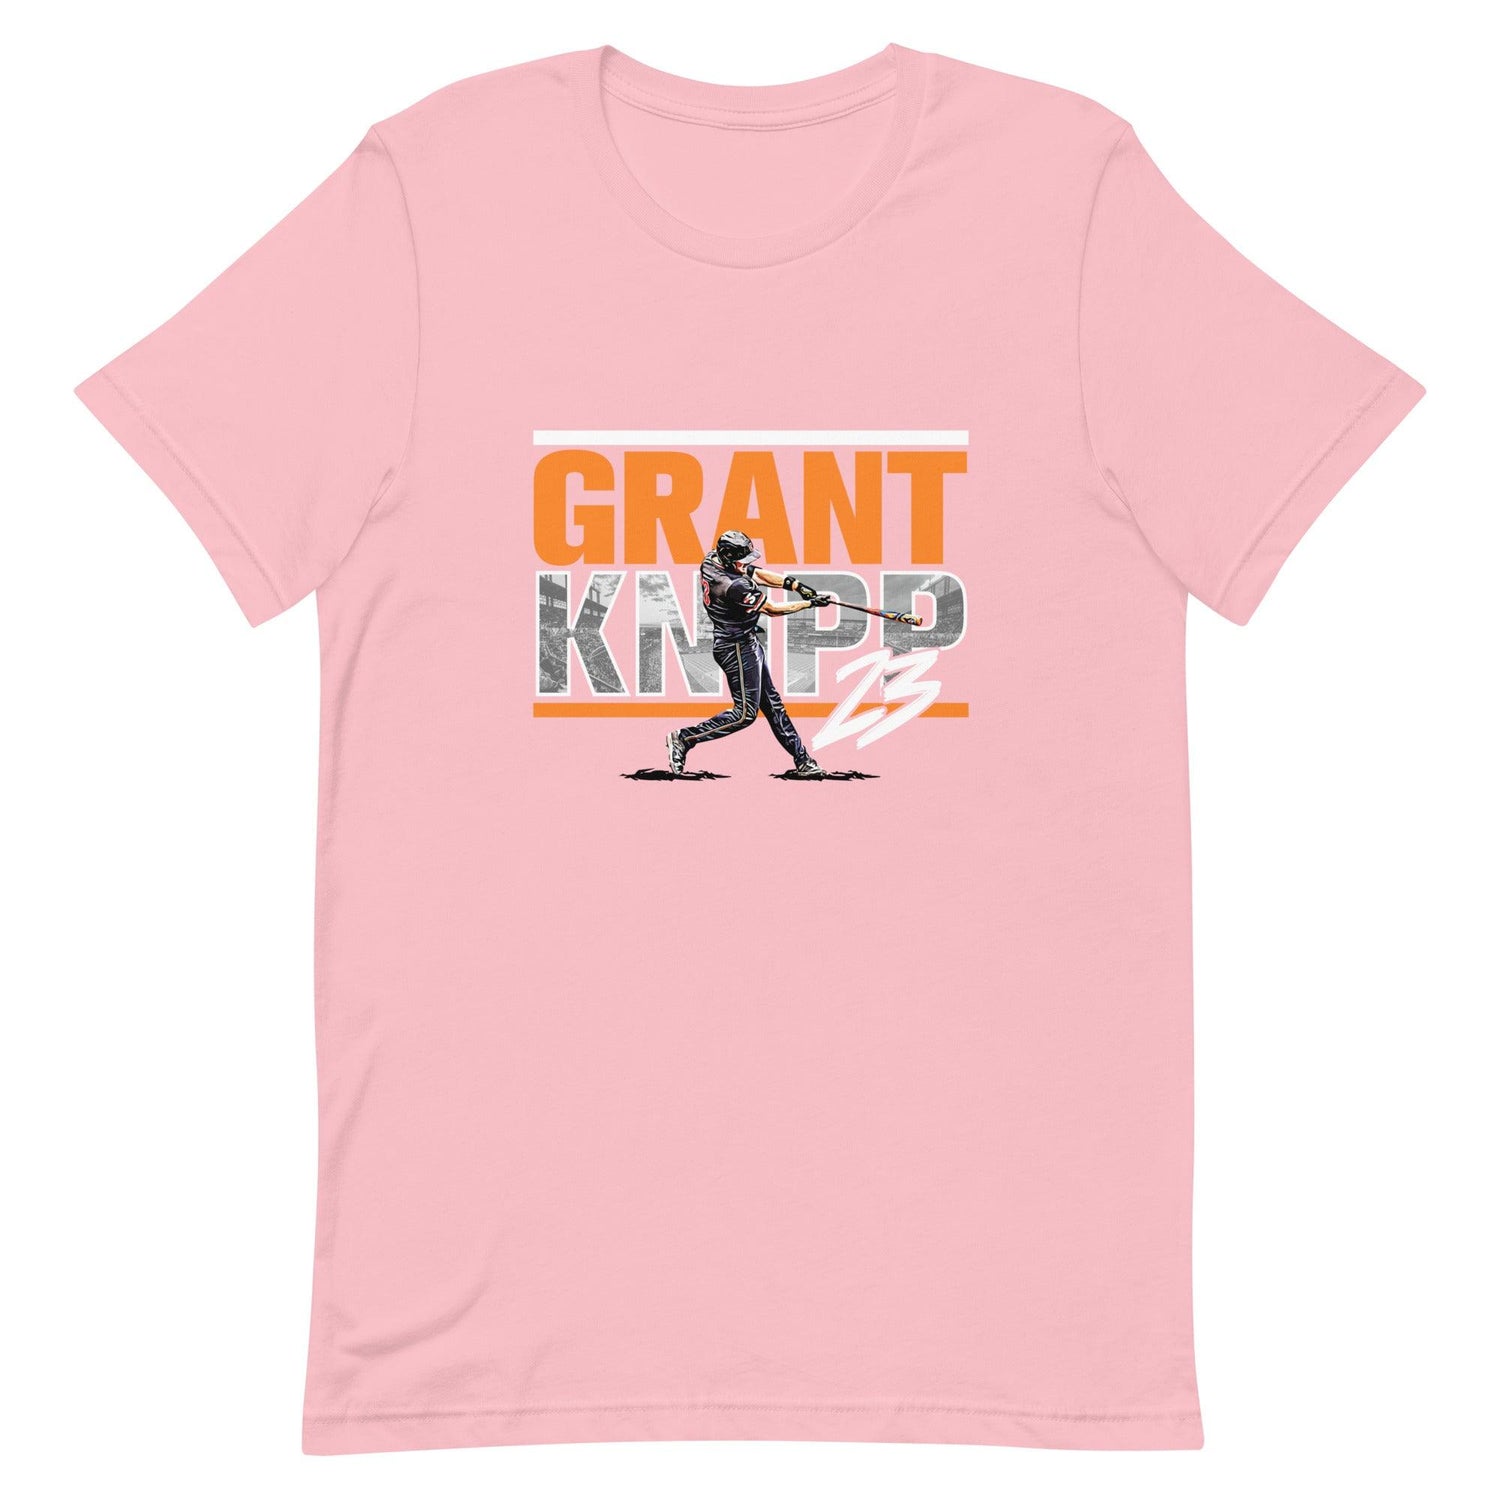 Grant Knipp "Gameday" t-shirt - Fan Arch